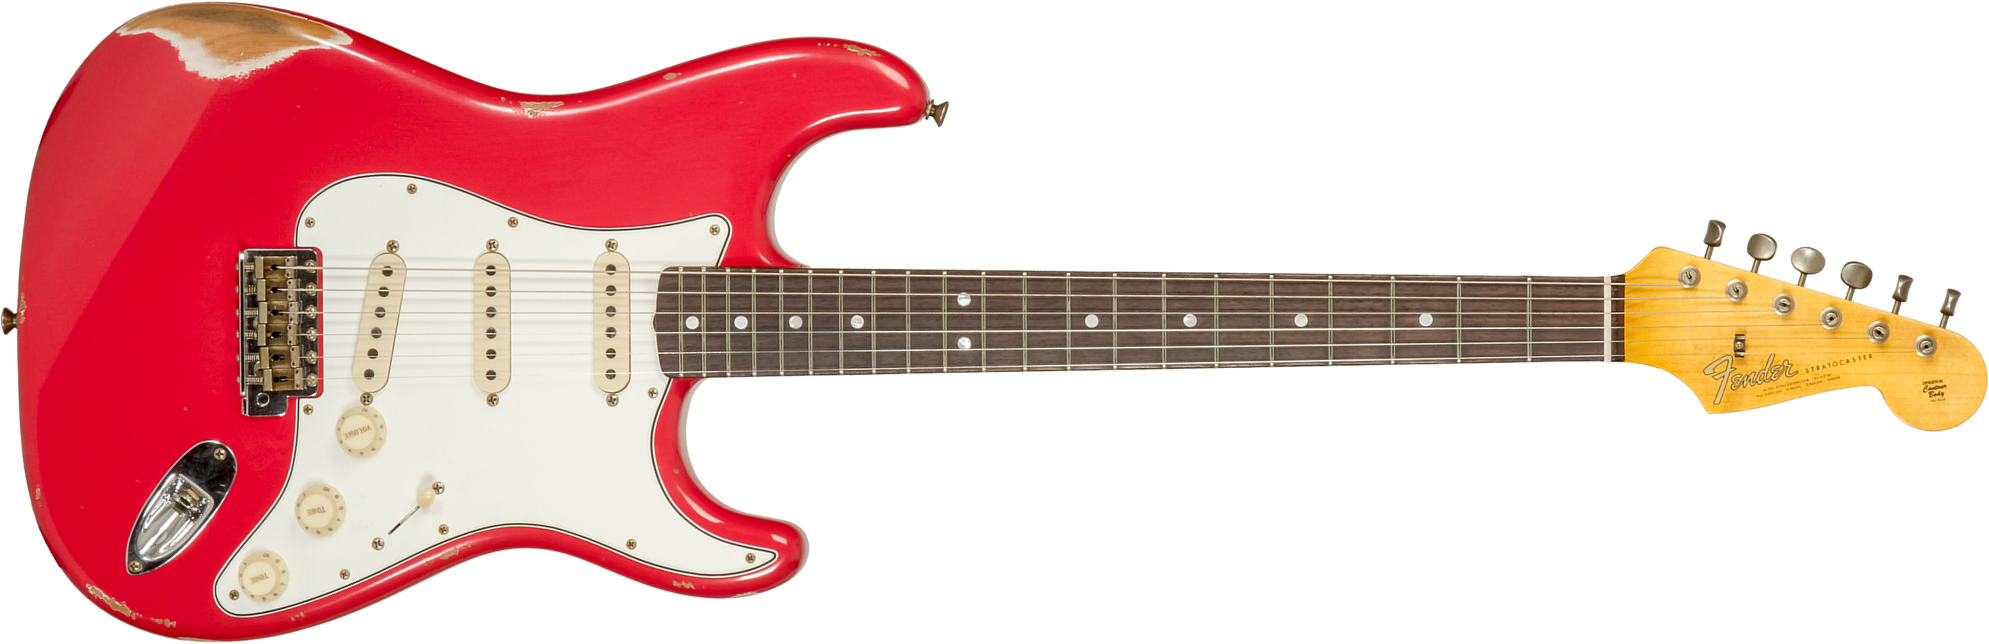 Fender Custom Shop Strat Late 1964 Trem 3s Rw #cz575557 - Relic Aged Fiesta Red - E-Gitarre in Str-Form - Main picture